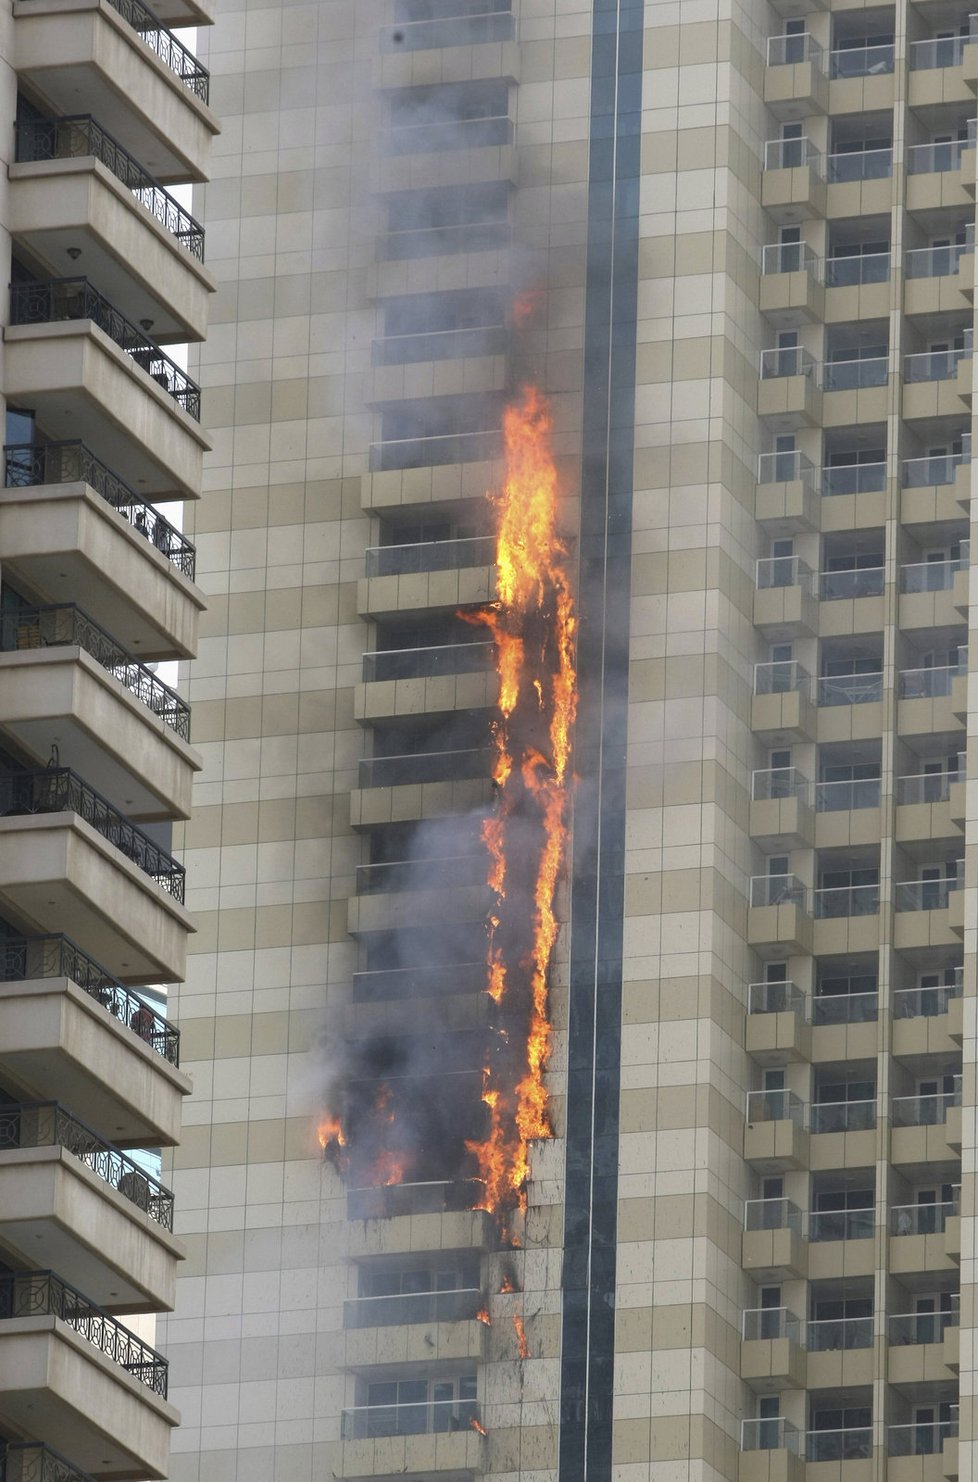 Požár dubajského mrakodrapu Sulafa